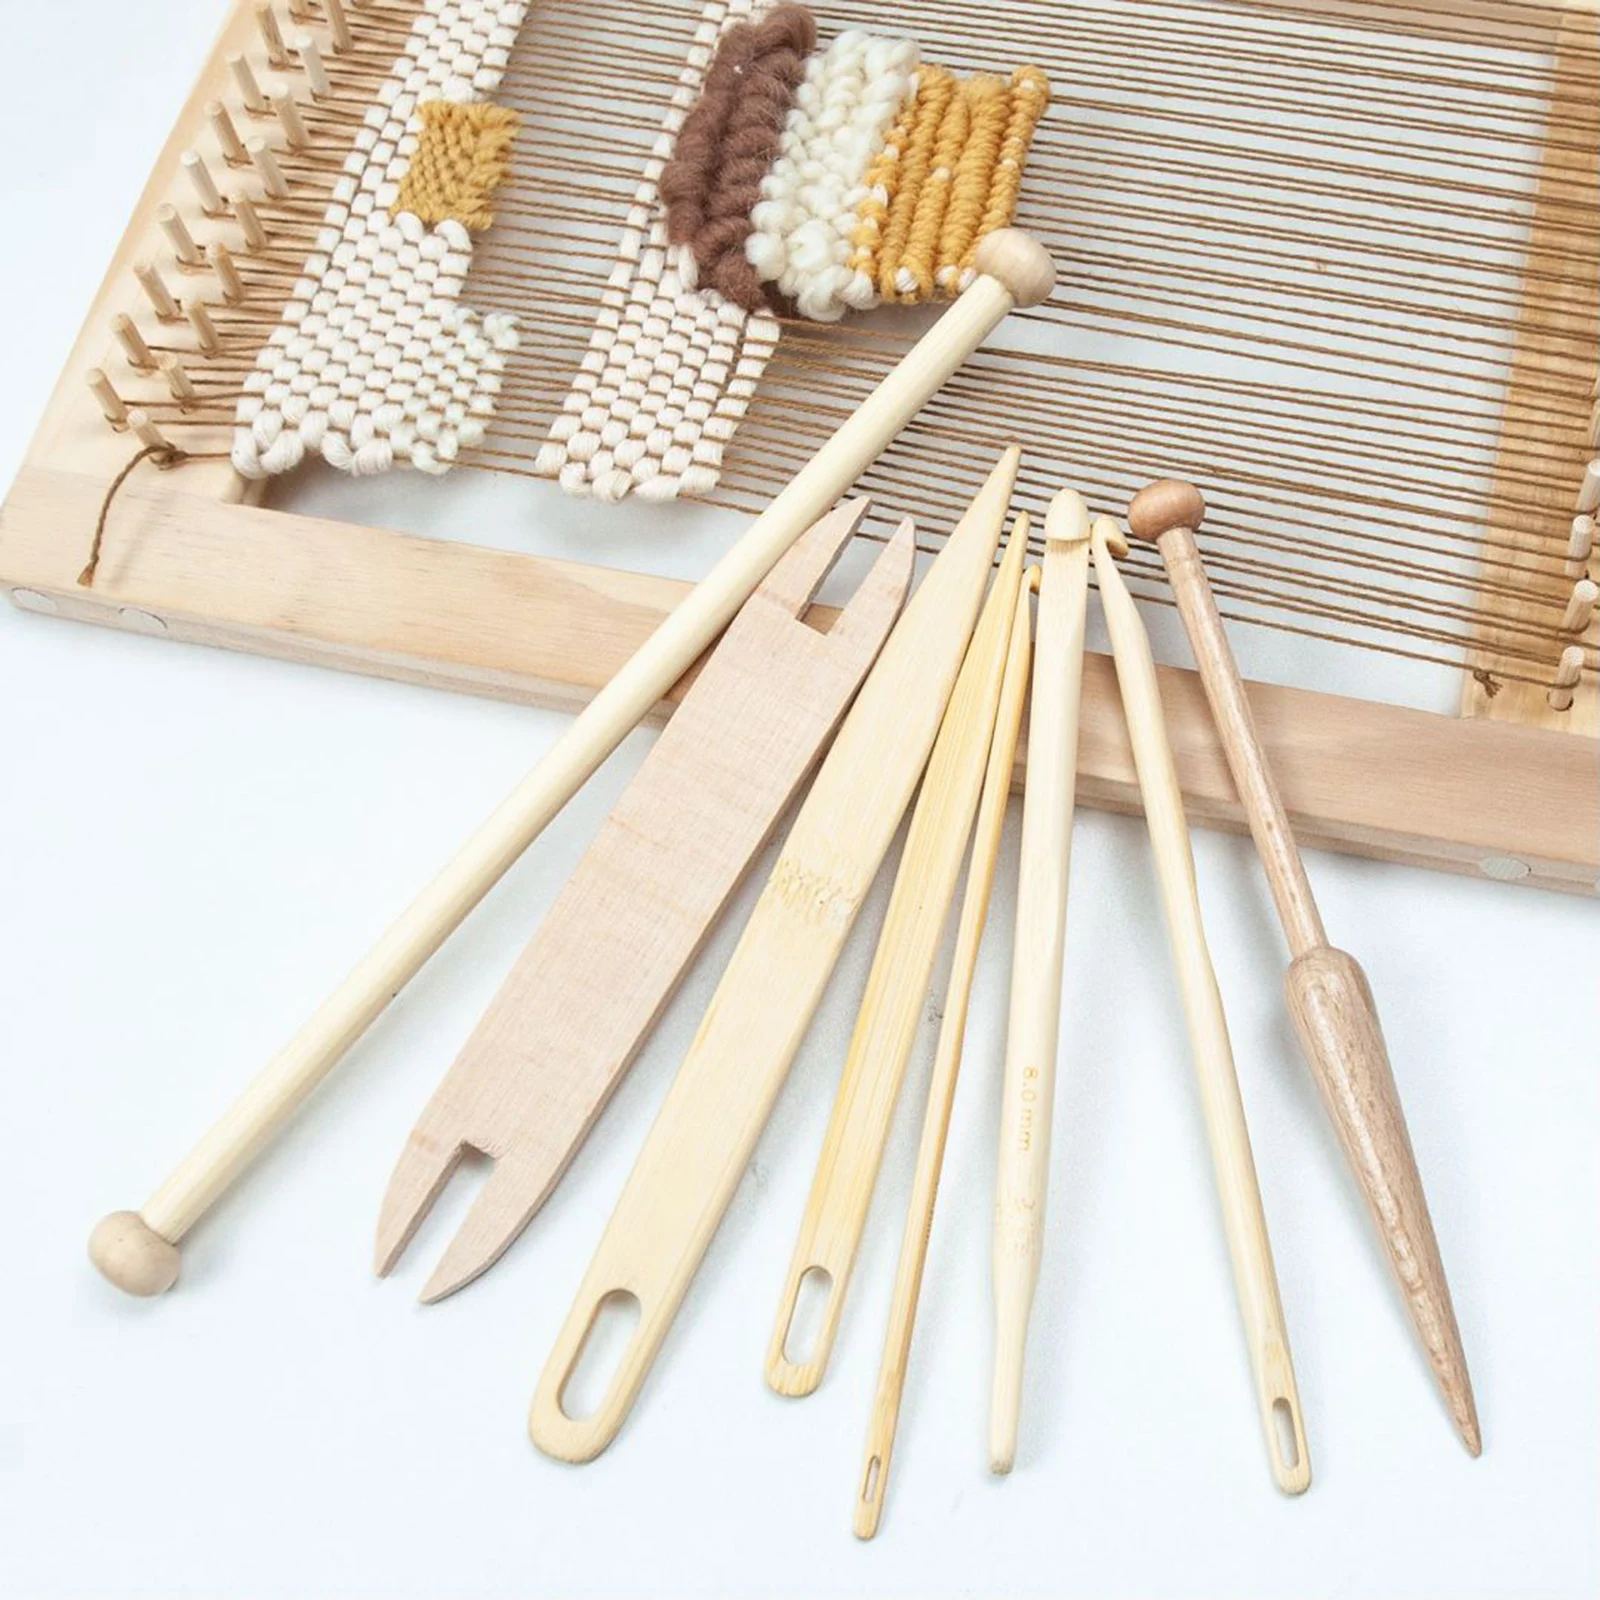 9Pcs/Set Weaving Loom Tools Wood Weaving Shuttle Crochet Needle Hand Loom Stick Tapestry Knitting DIY Craft Tools